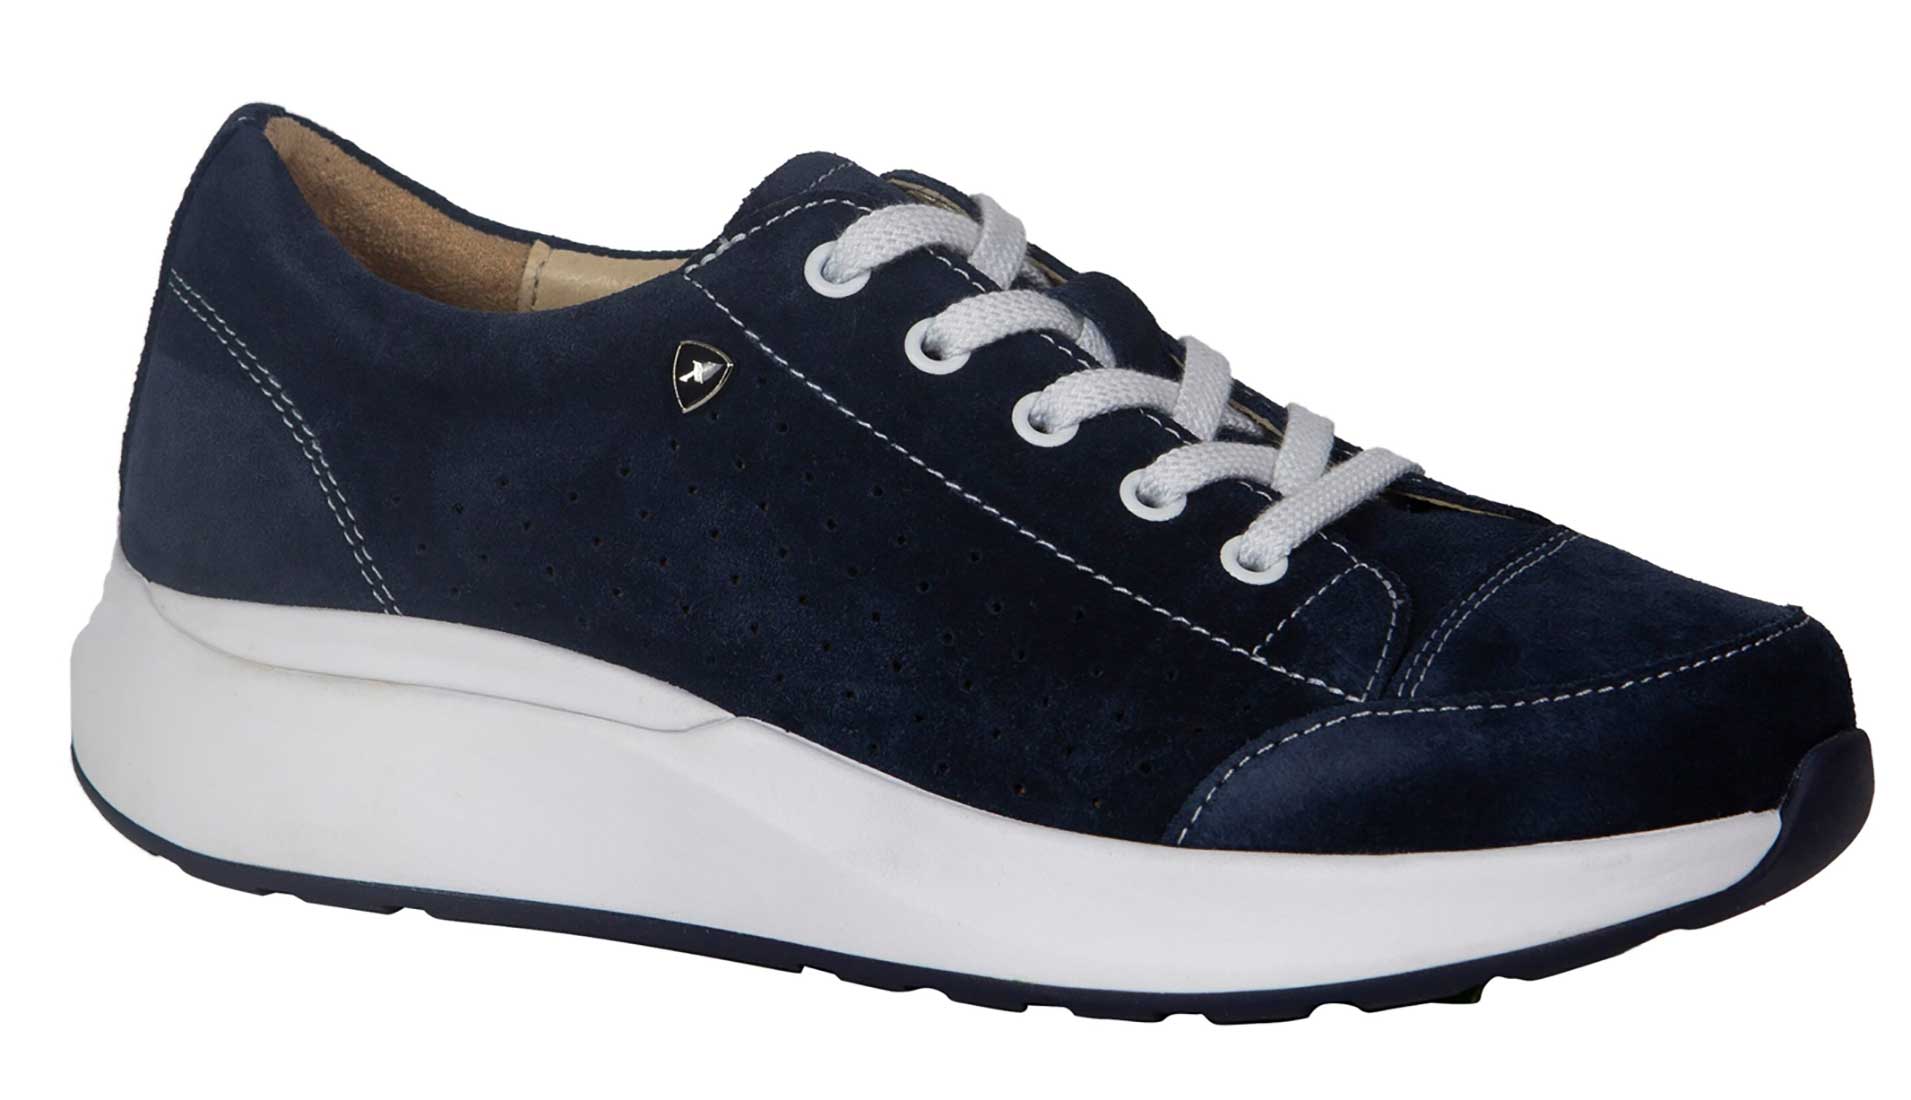 Xelero Shoes Heidi X22245 - Women's Comfort Therapeutic Shoe - Casual & Walking Shoe - Medium - Wide - Extra Depth For Orthotics